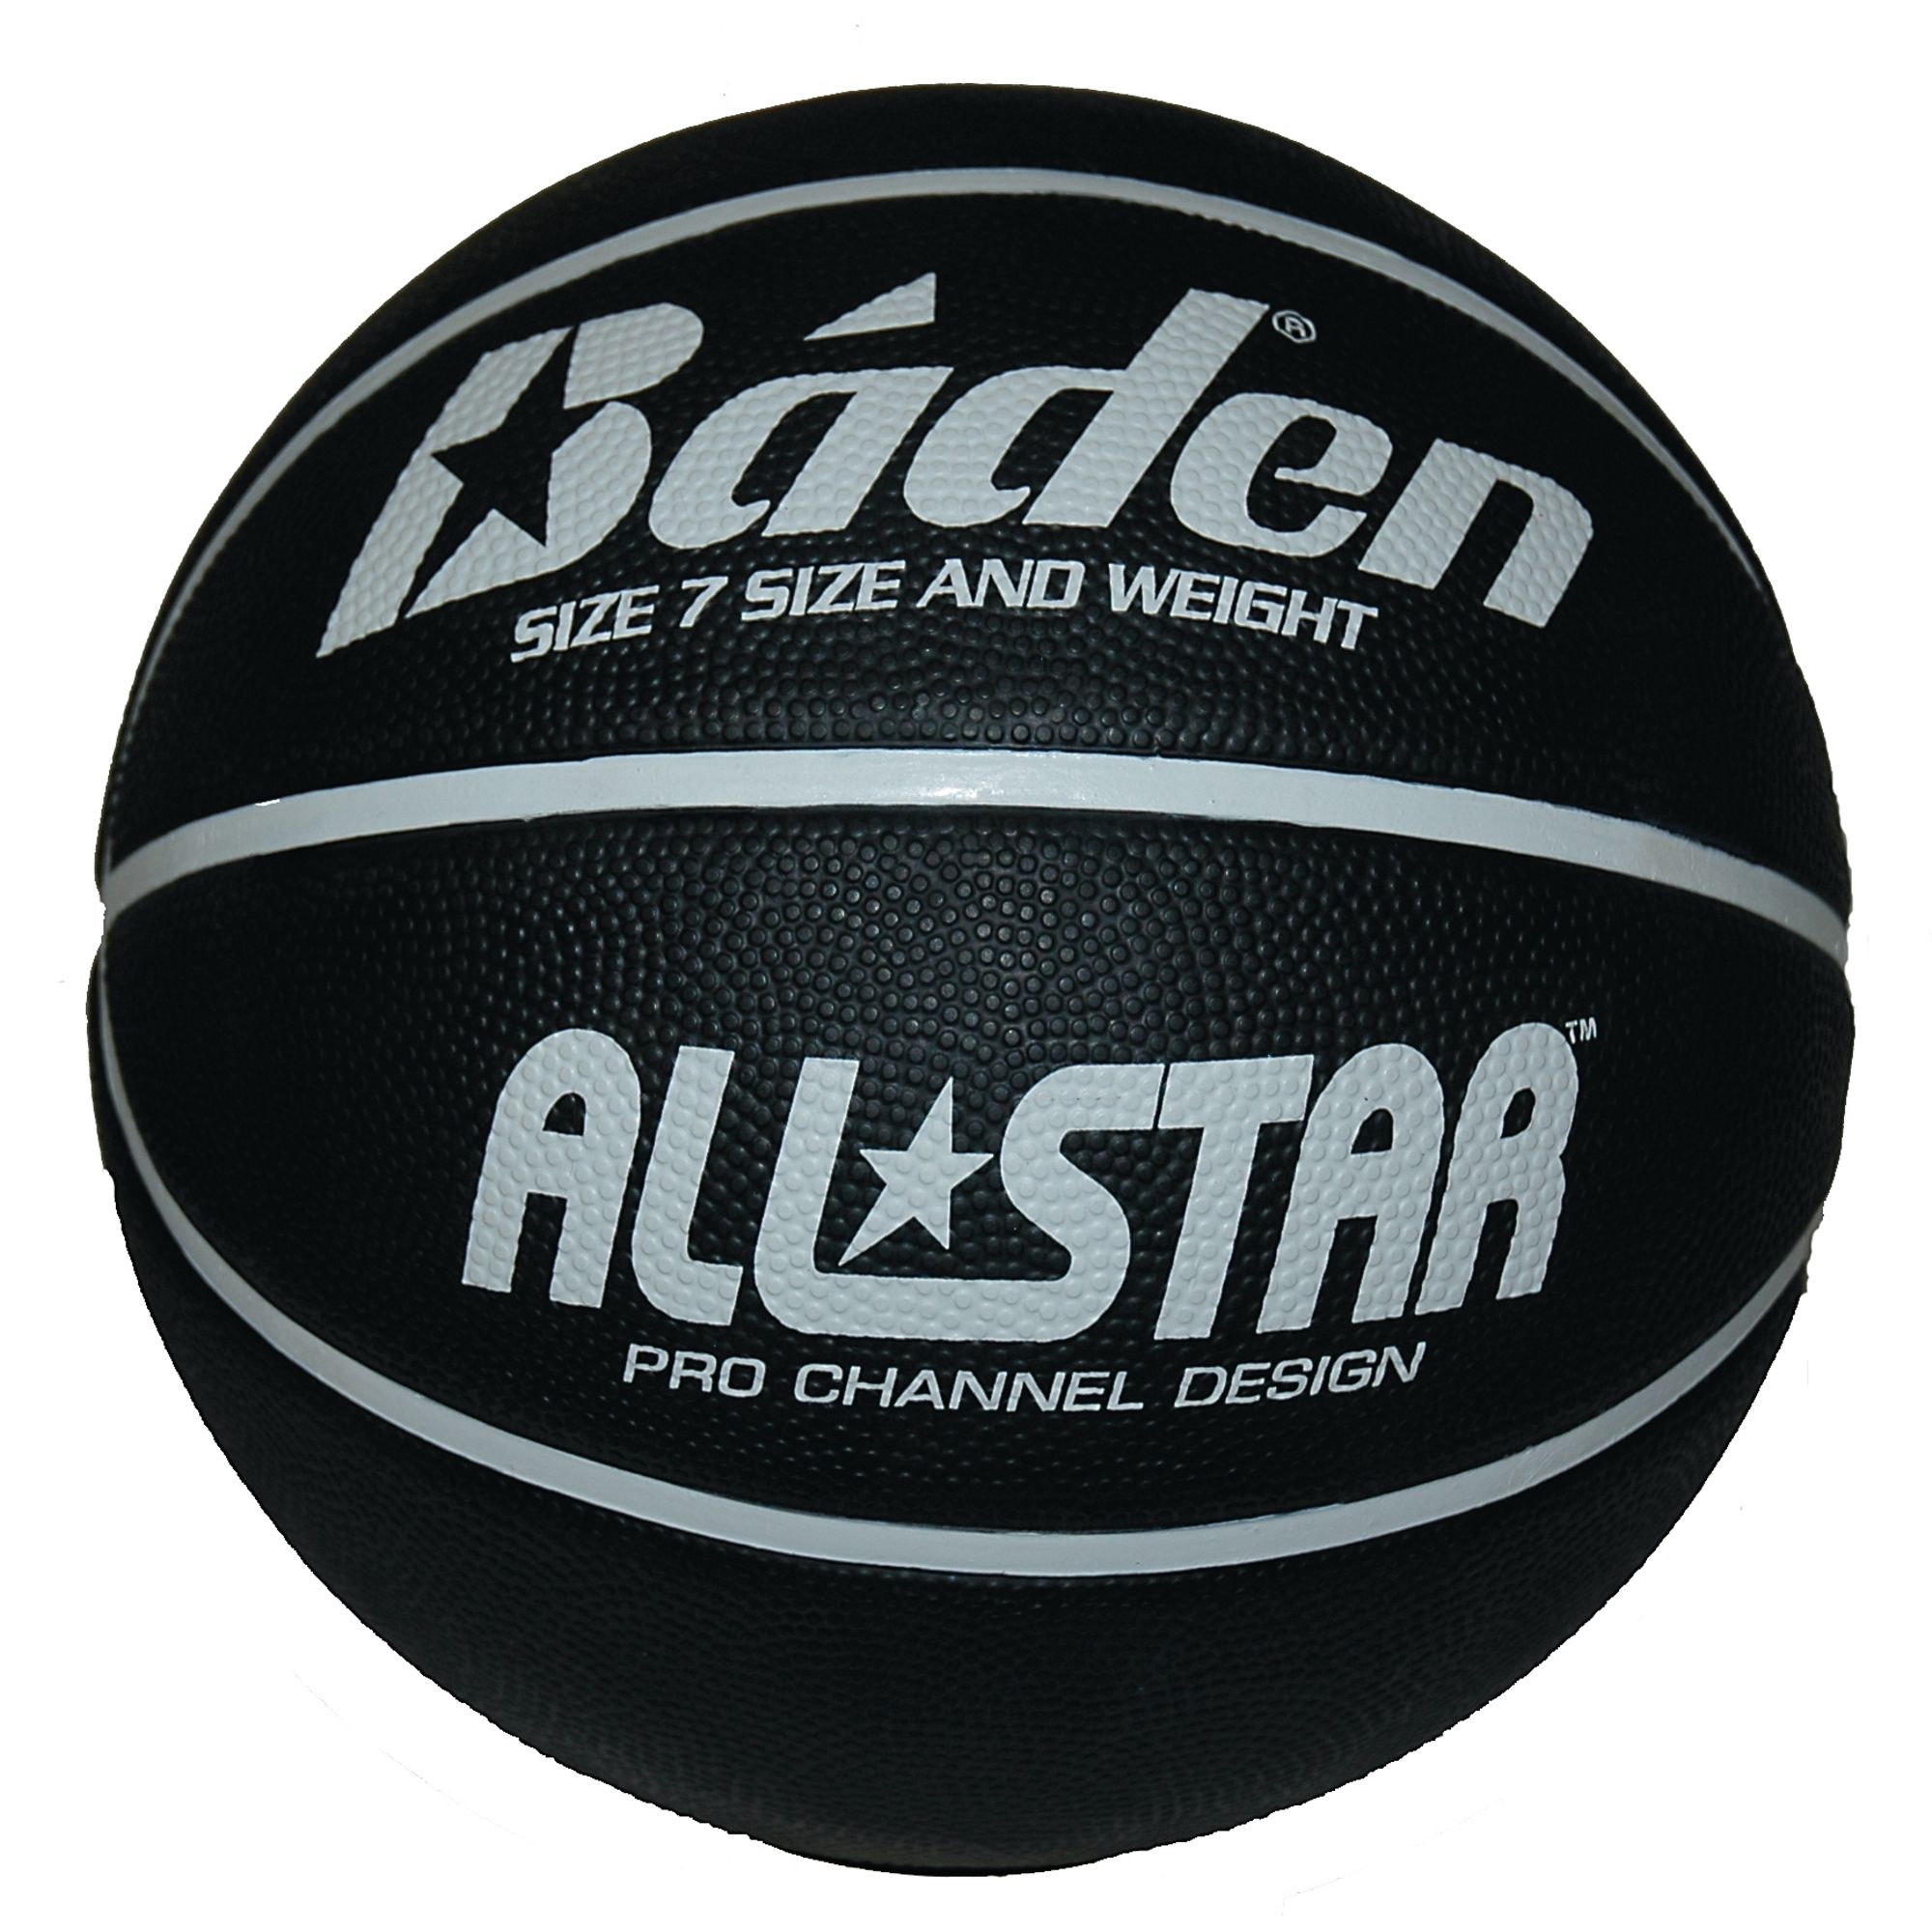 B?íden All Star Basketball Size 7 Blk-wht